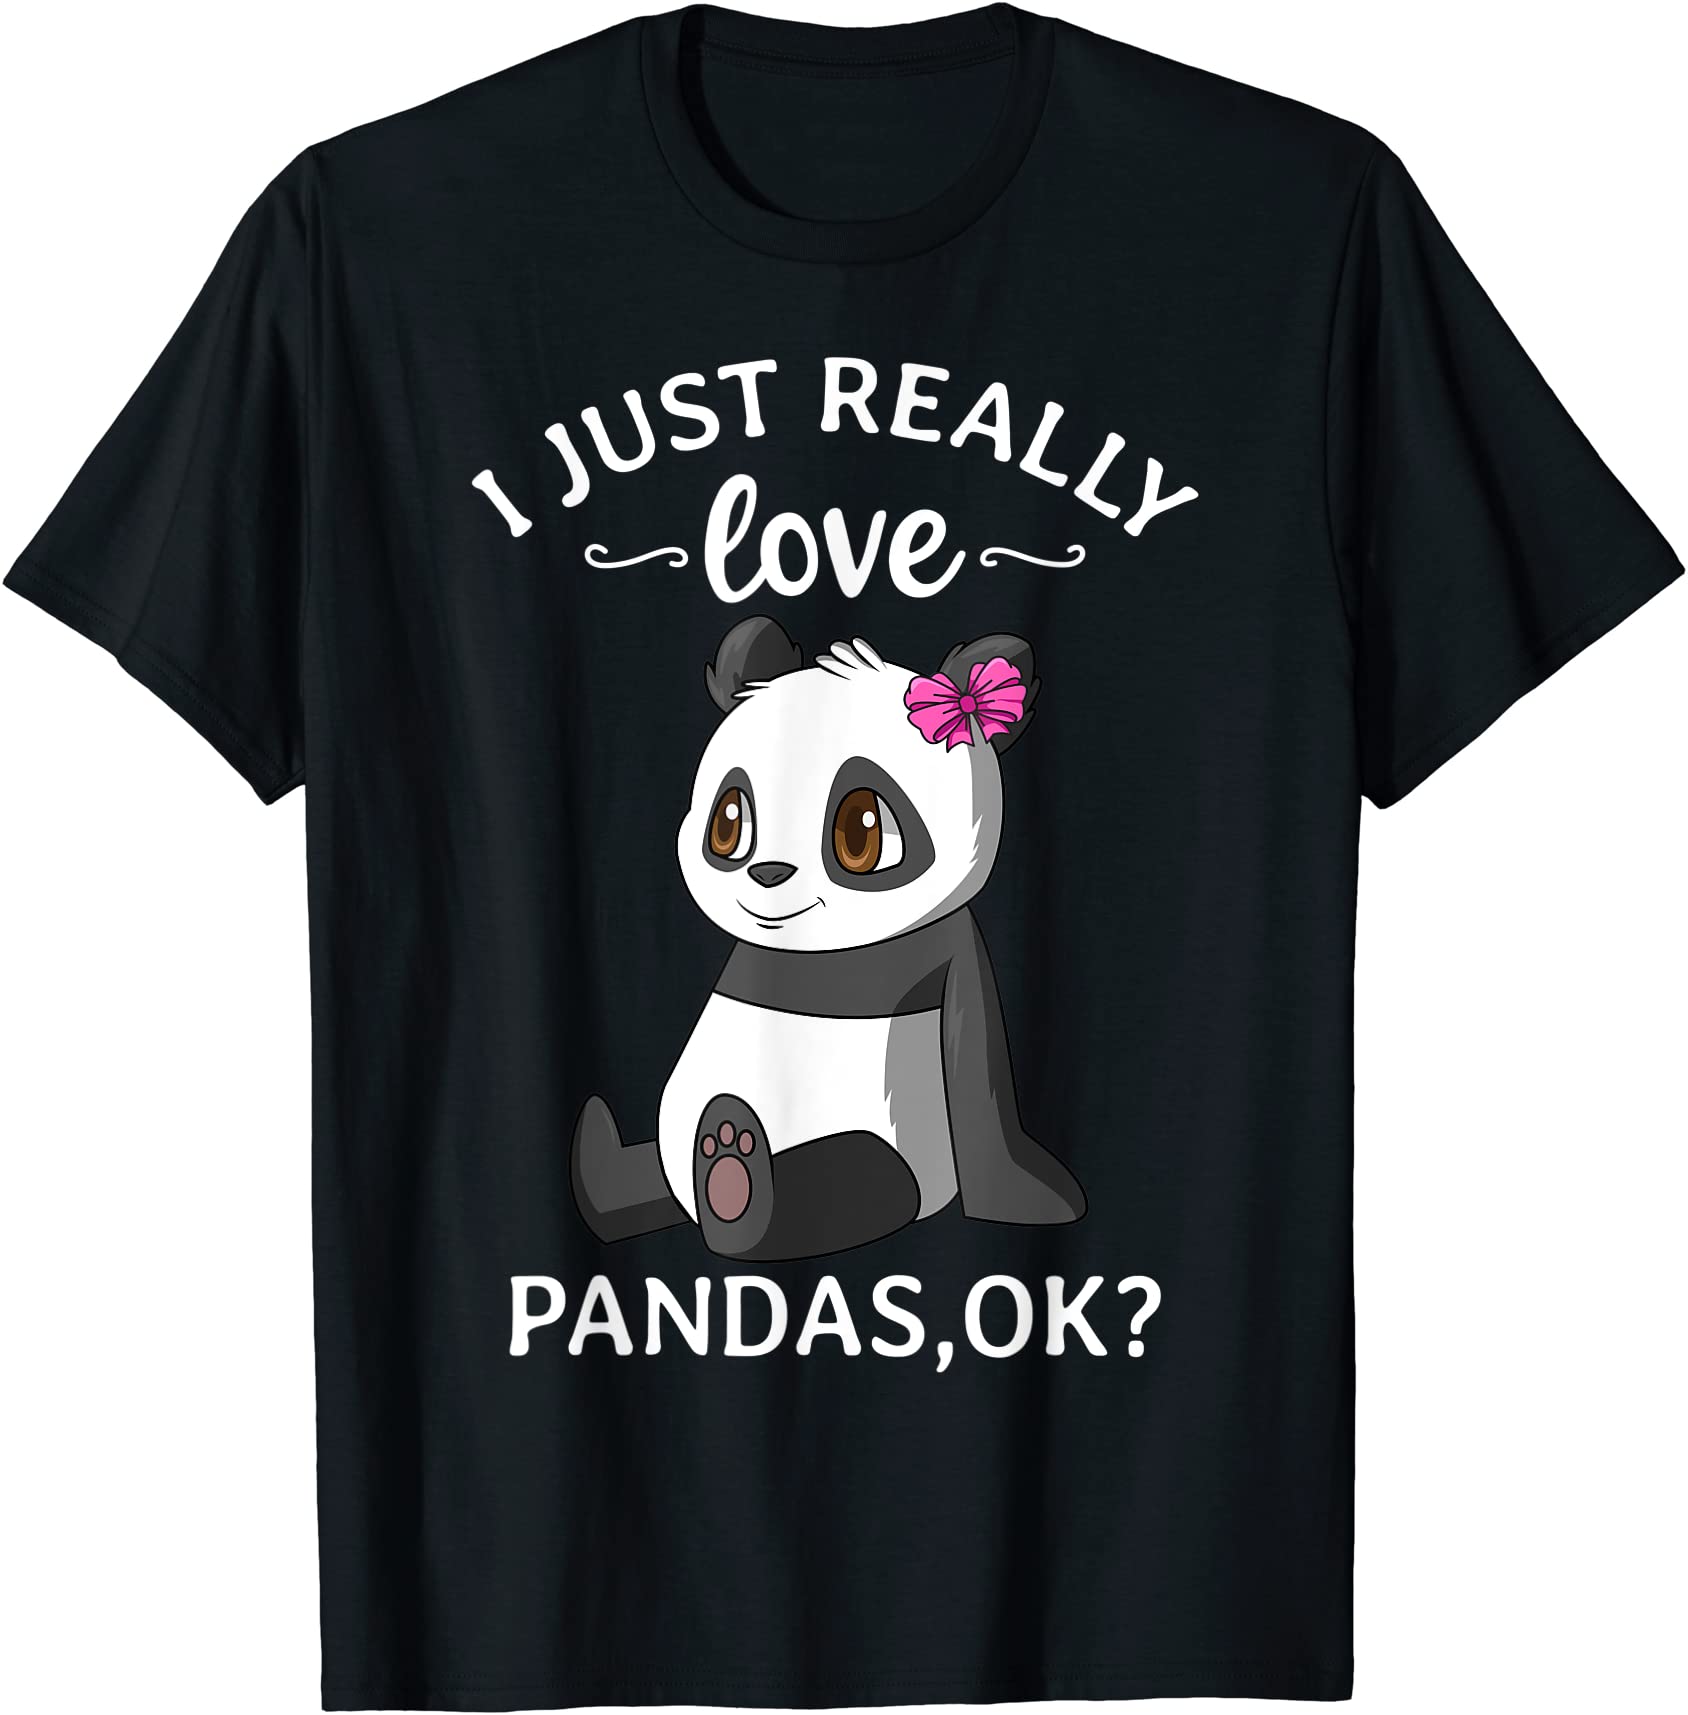 i just really love pandas ok panda girl t shirt men - Buy t-shirt designs